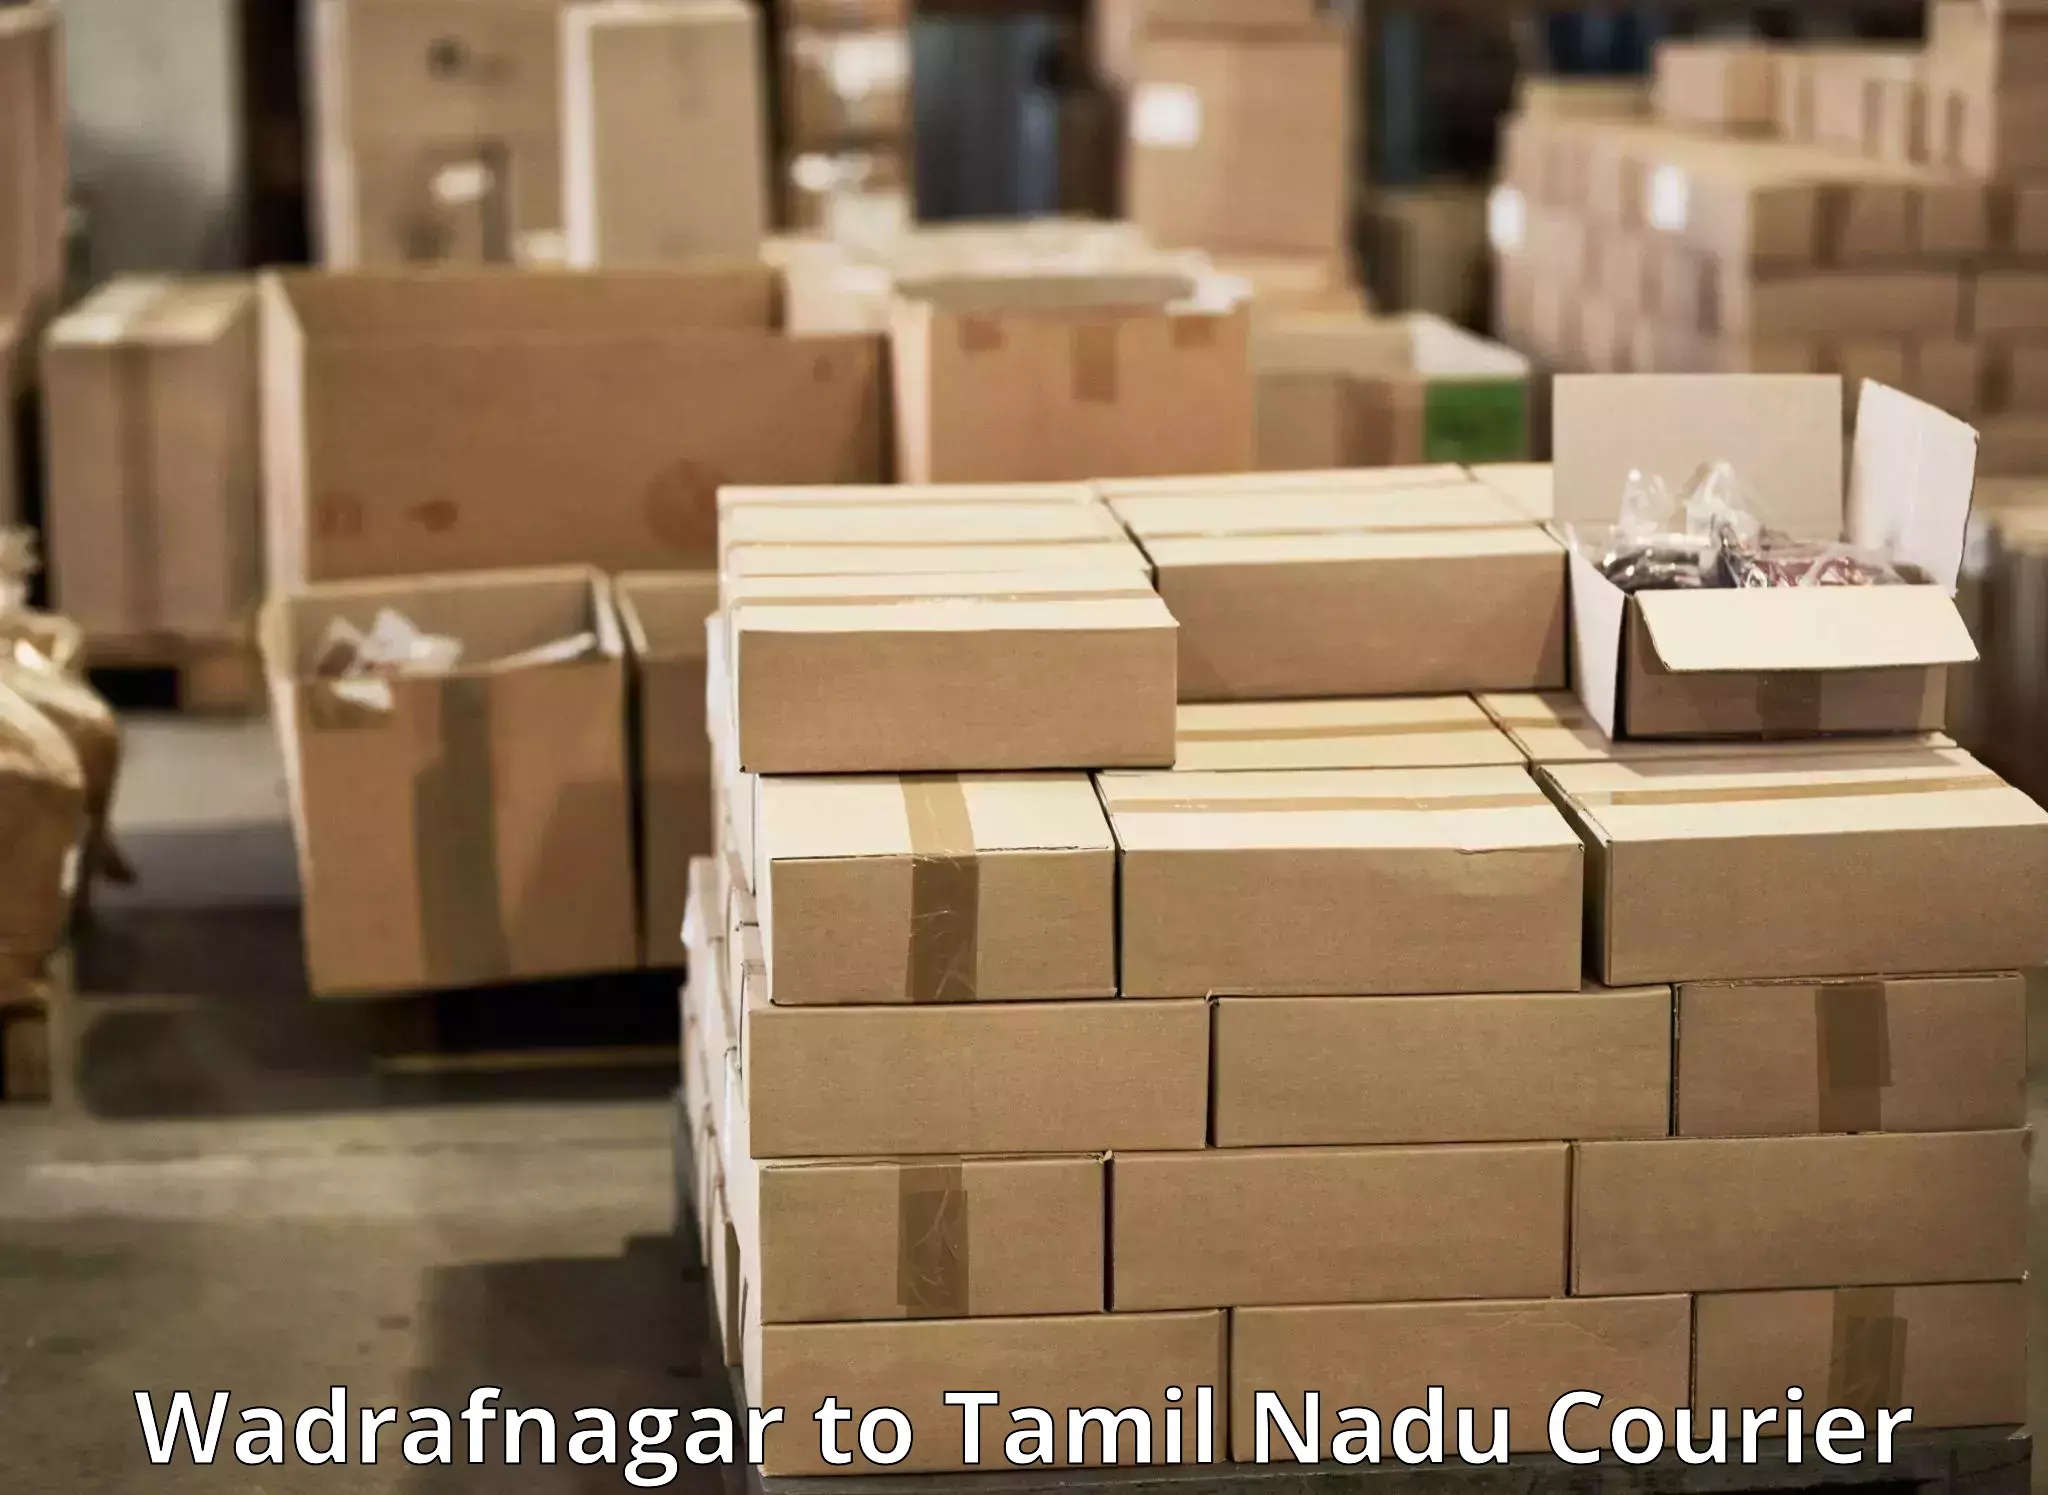 On-demand shipping options Wadrafnagar to Paramakudi